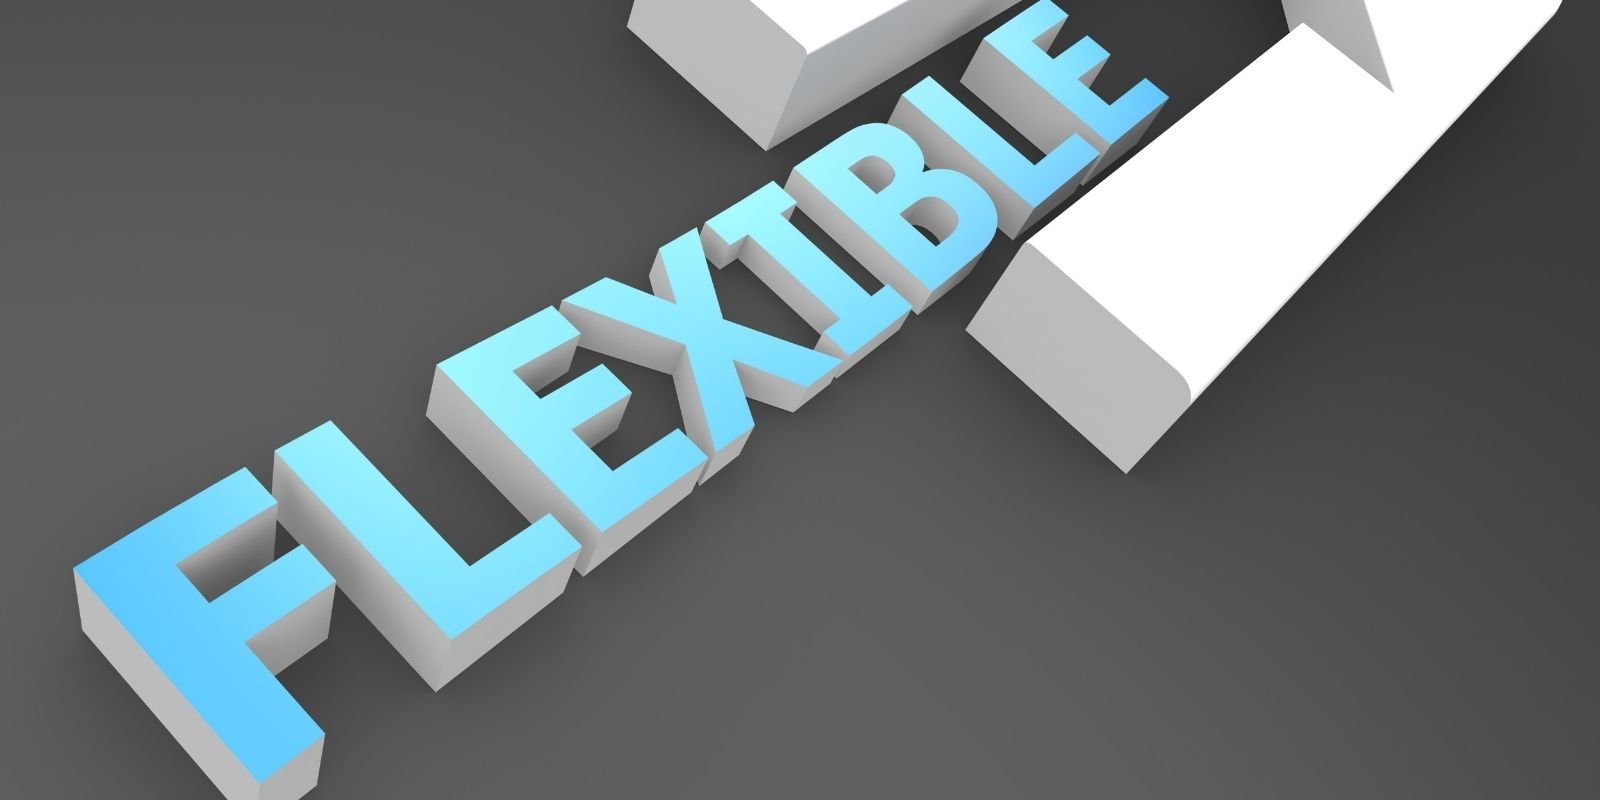 7. Be Flexible